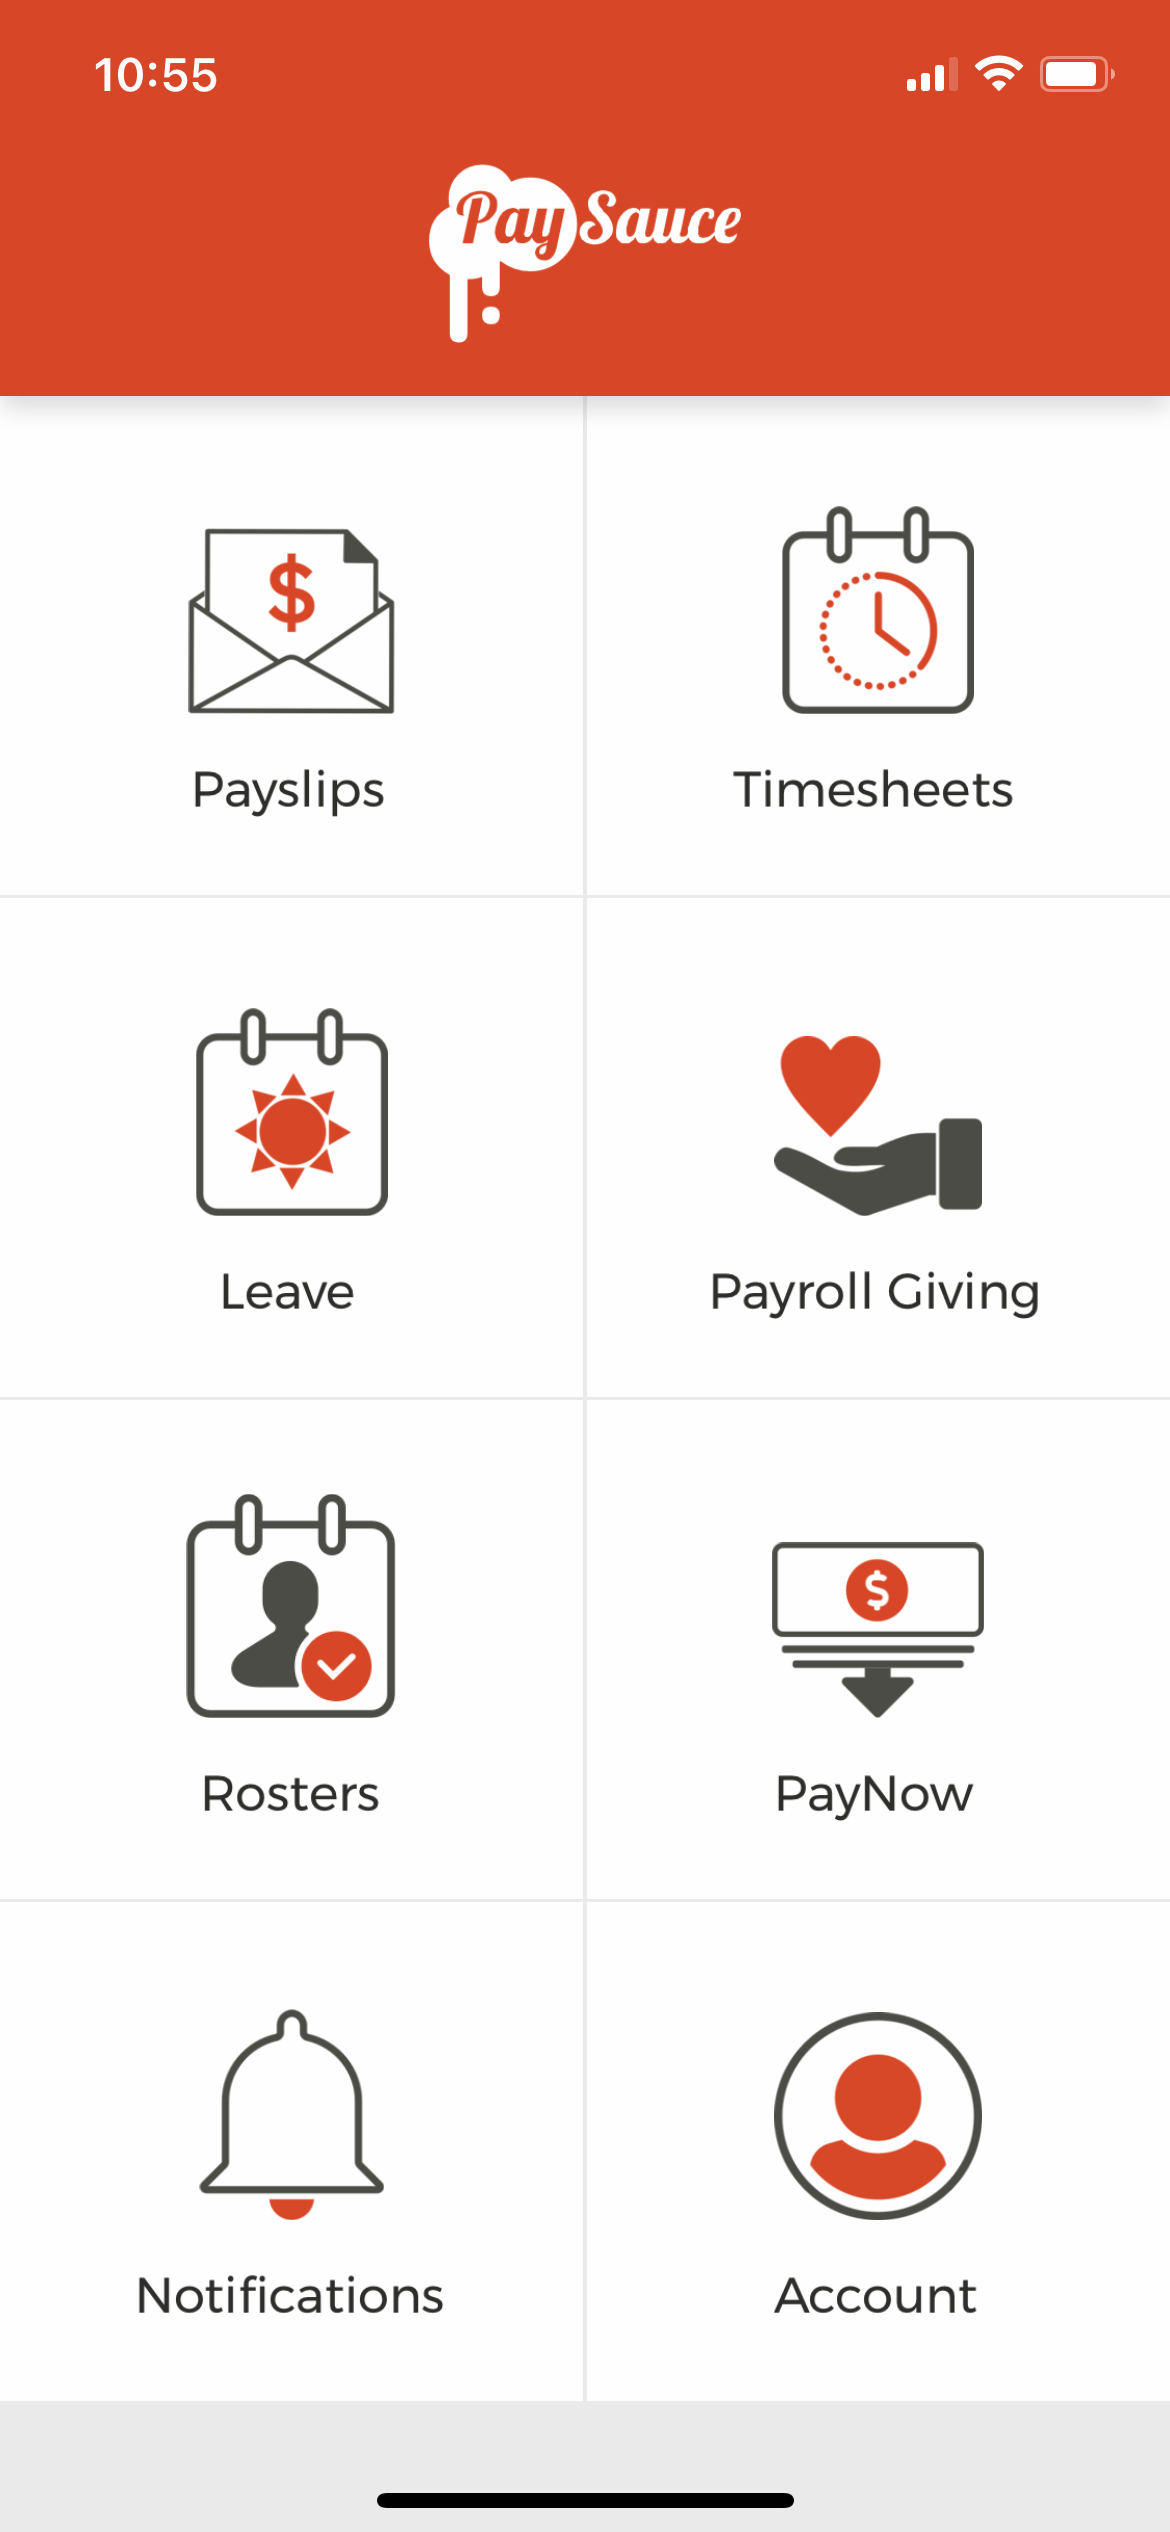 PaySauce Employee App - Dashboard